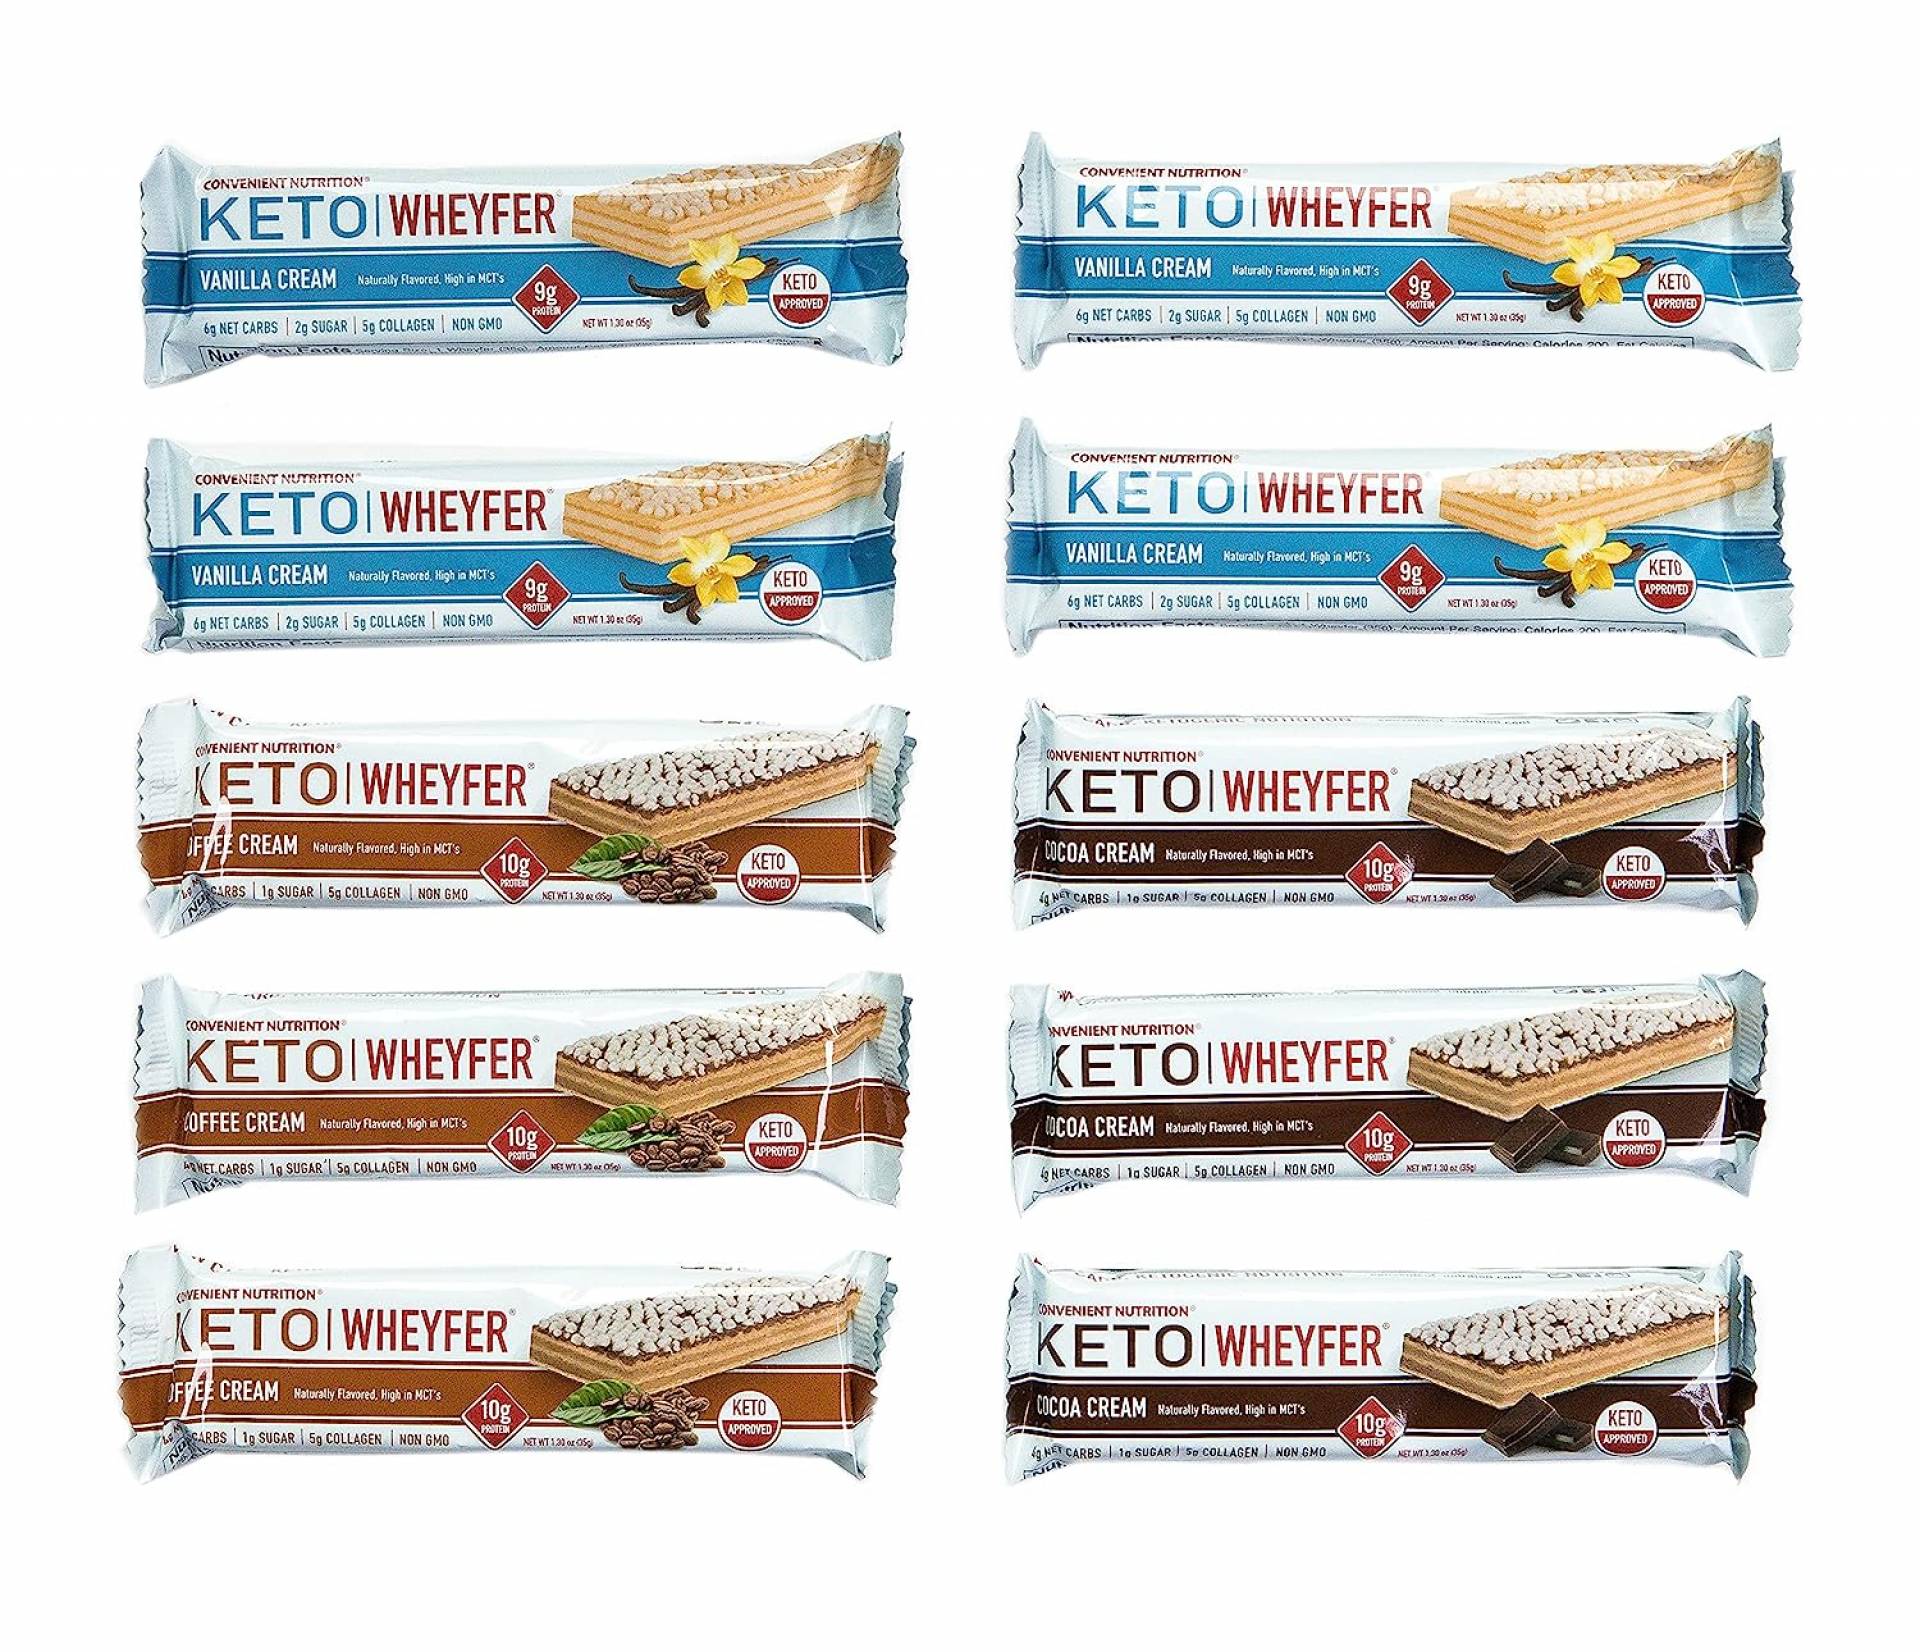 Convenient Nutrition Keto Wheyfer Bars - $2.99